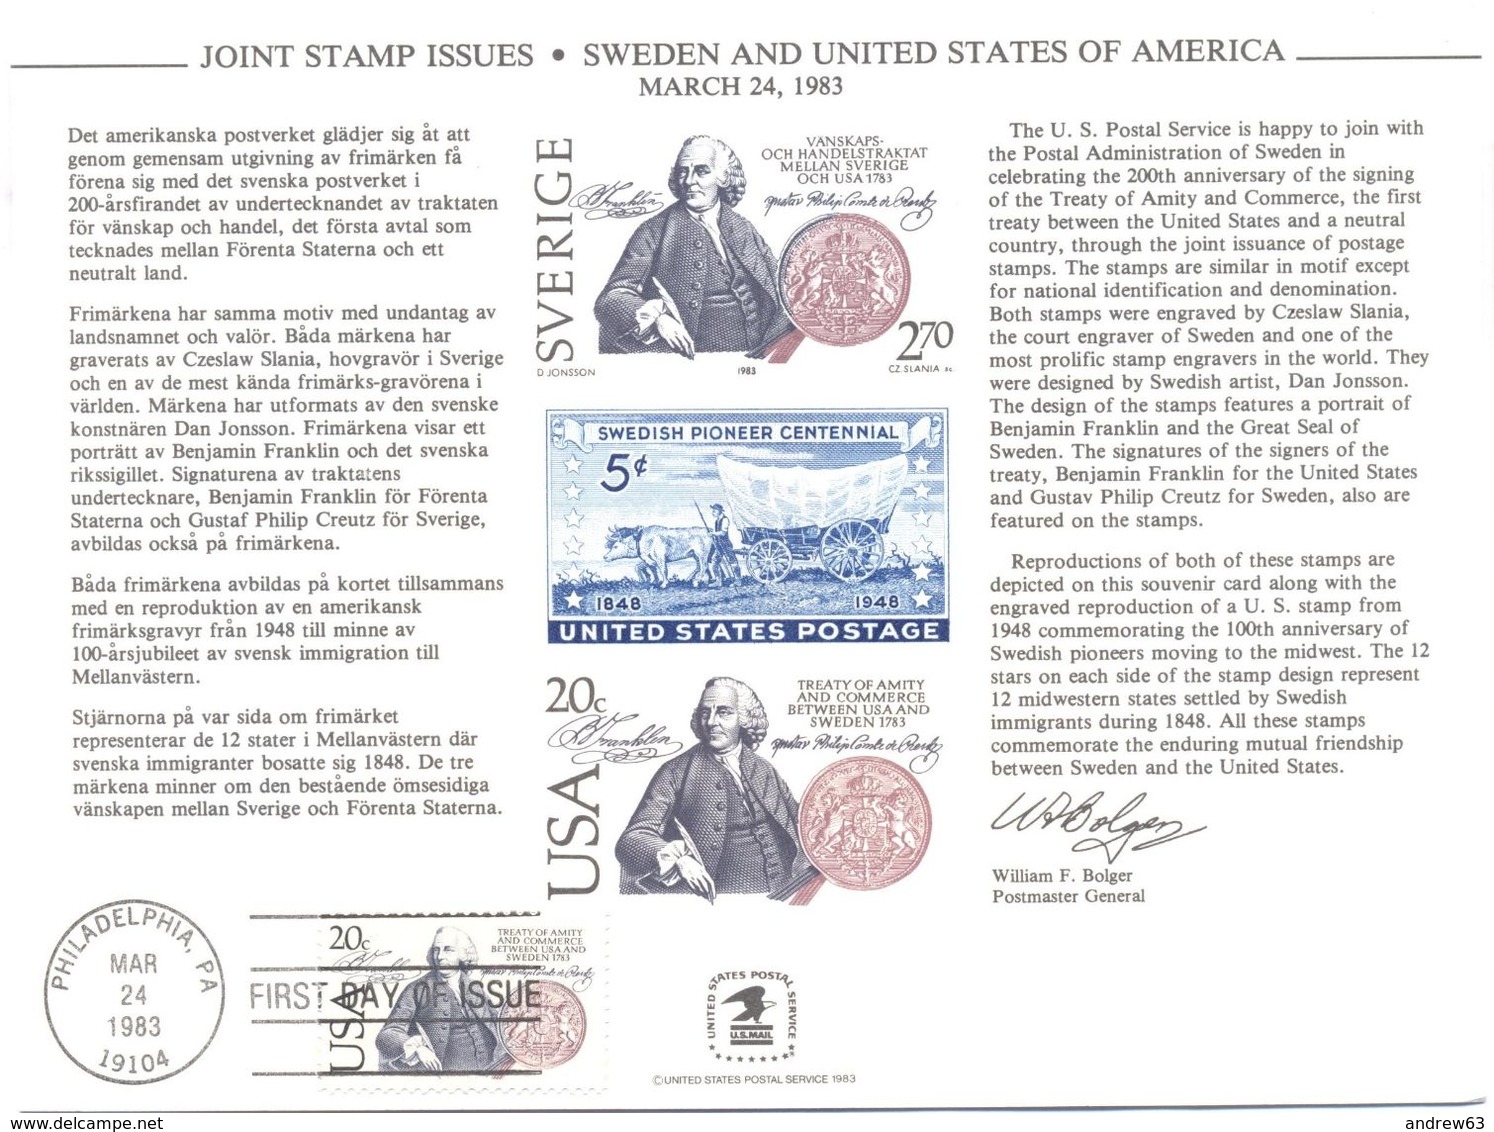 STATI UNITI - USA - 1983 - Cancelled Mint Souvenir Card - Joint Stamp Issues - USA-SWEDEN 200th Ann. Of Treaty - FDC - Souvenirkarten